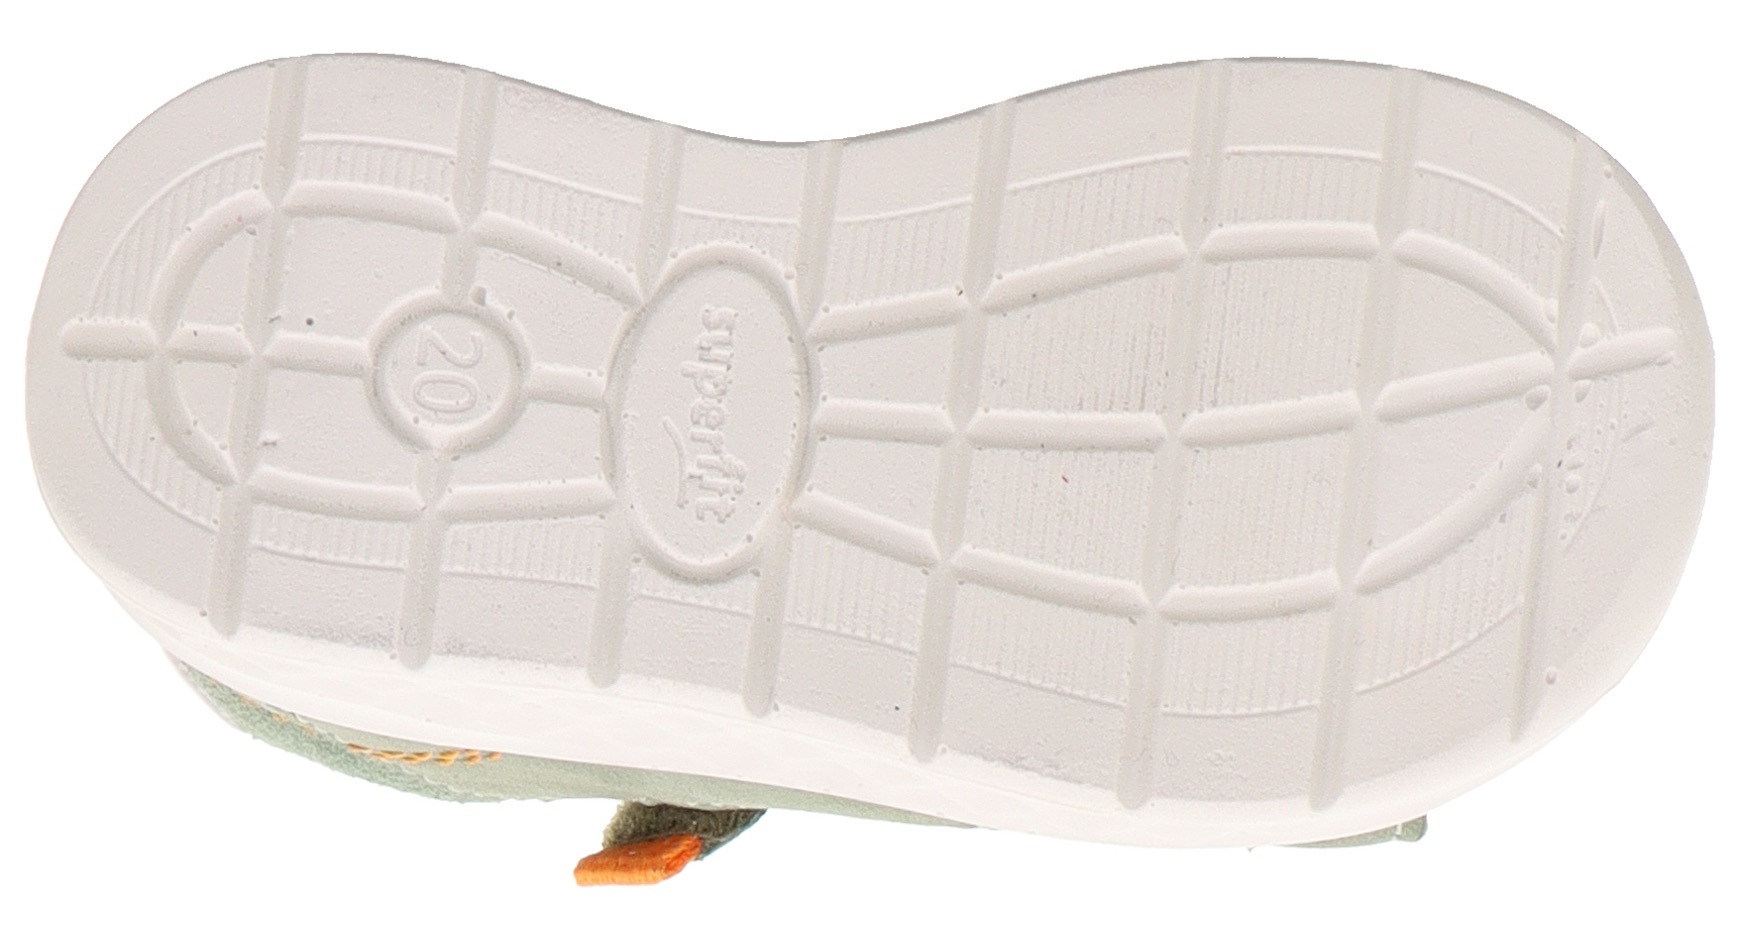 Superfit Sandale »LAGOON WMS: Mittel«, Sommerschuh, Klettschuh, Sandalette, aus umweltschonendem Material